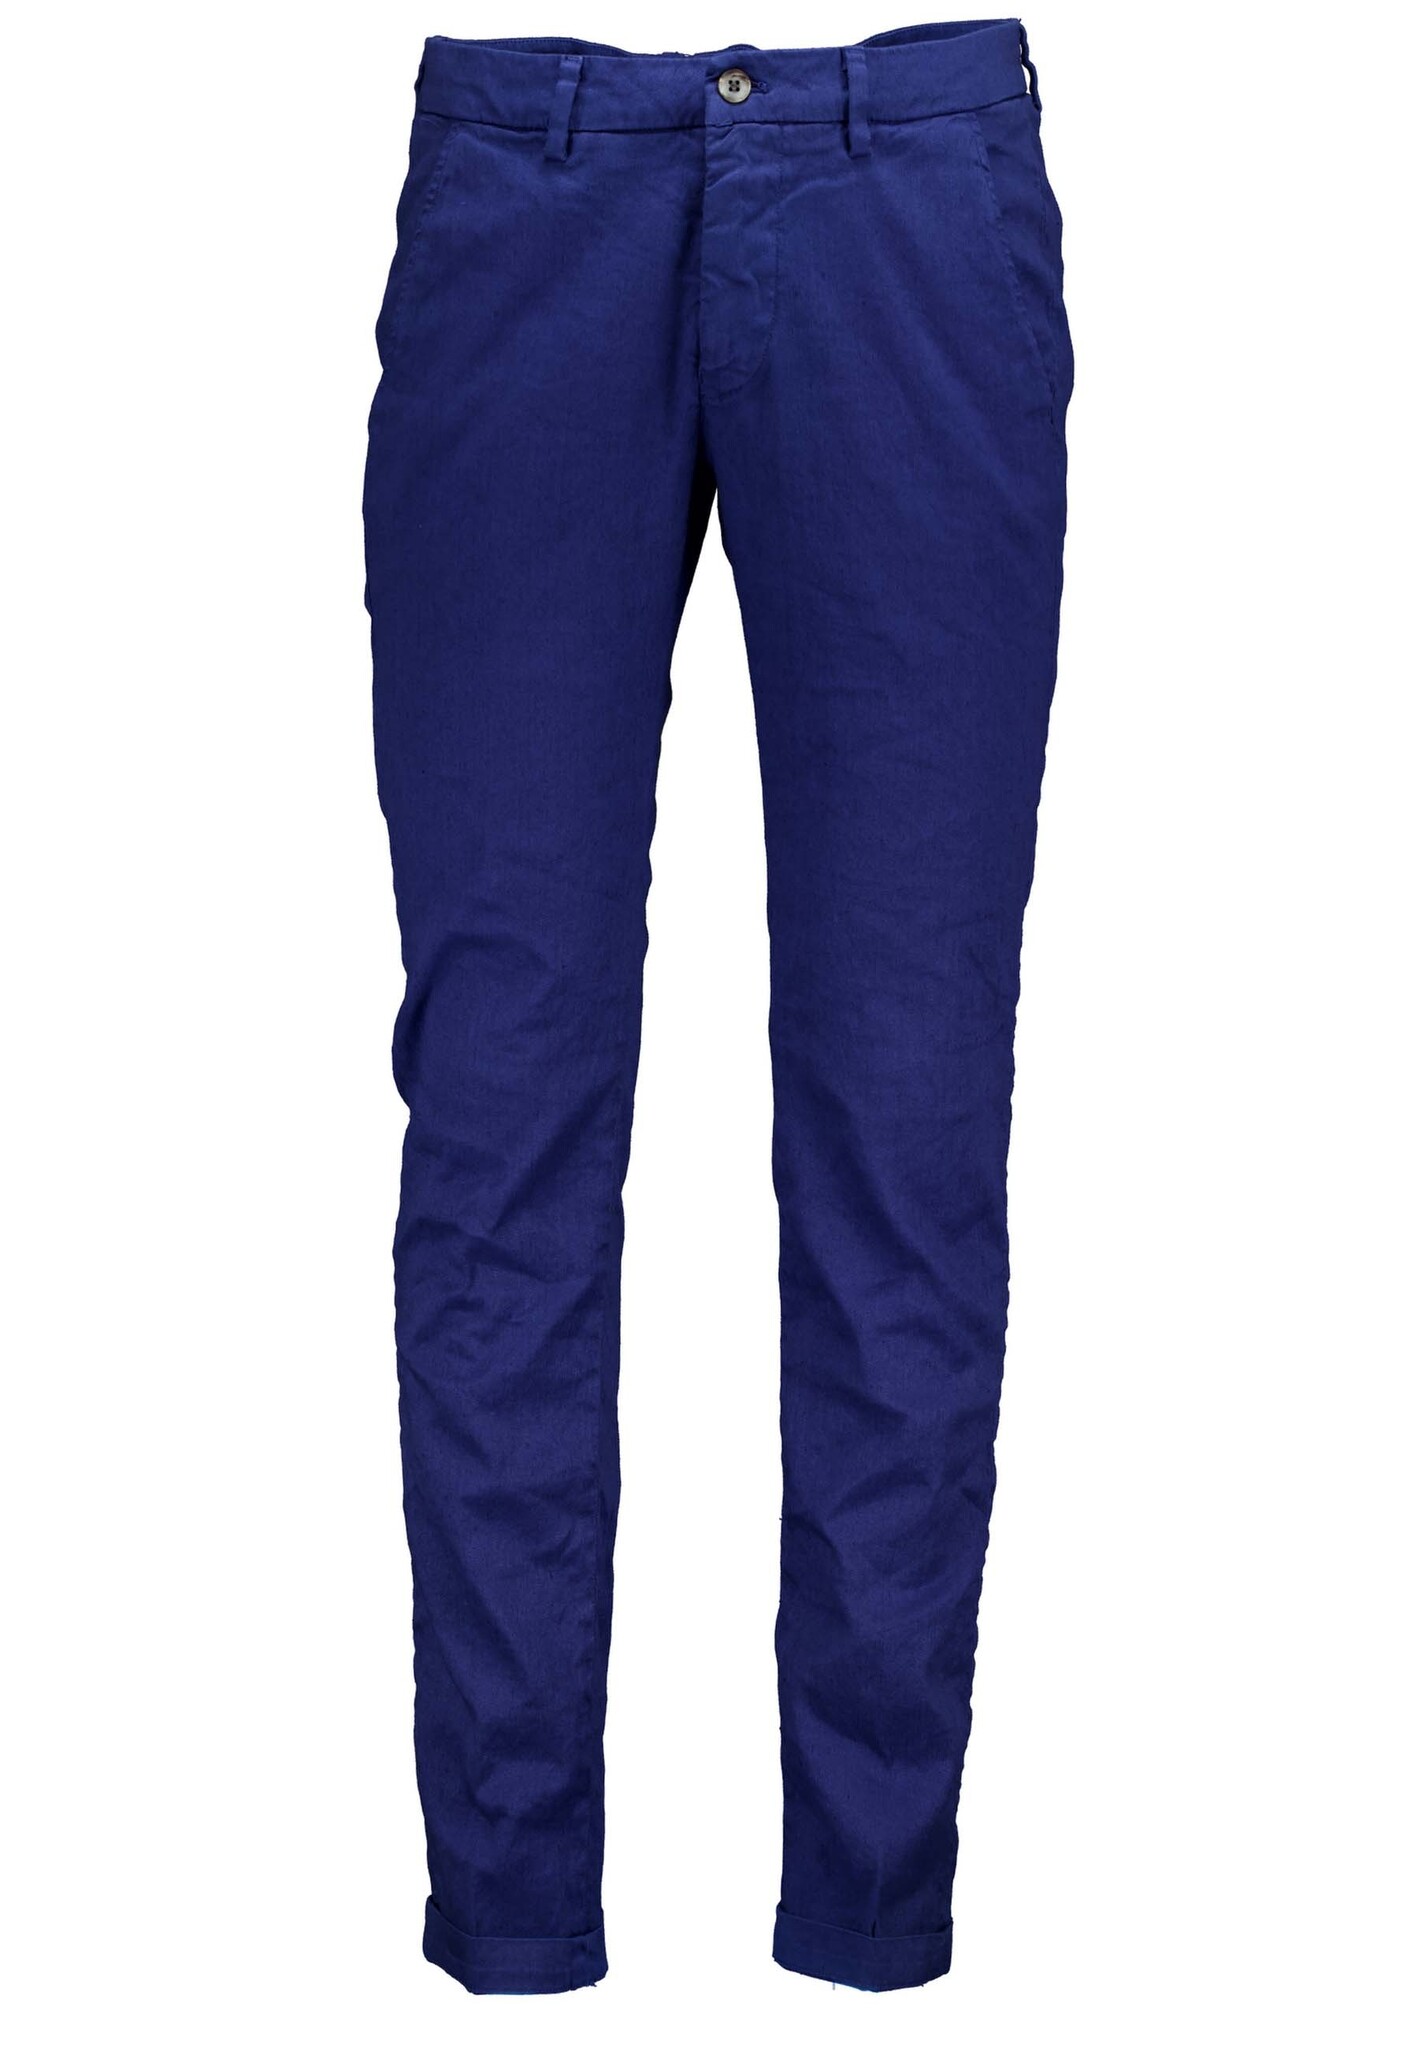 Masons pantalons blauw Heren maat 52